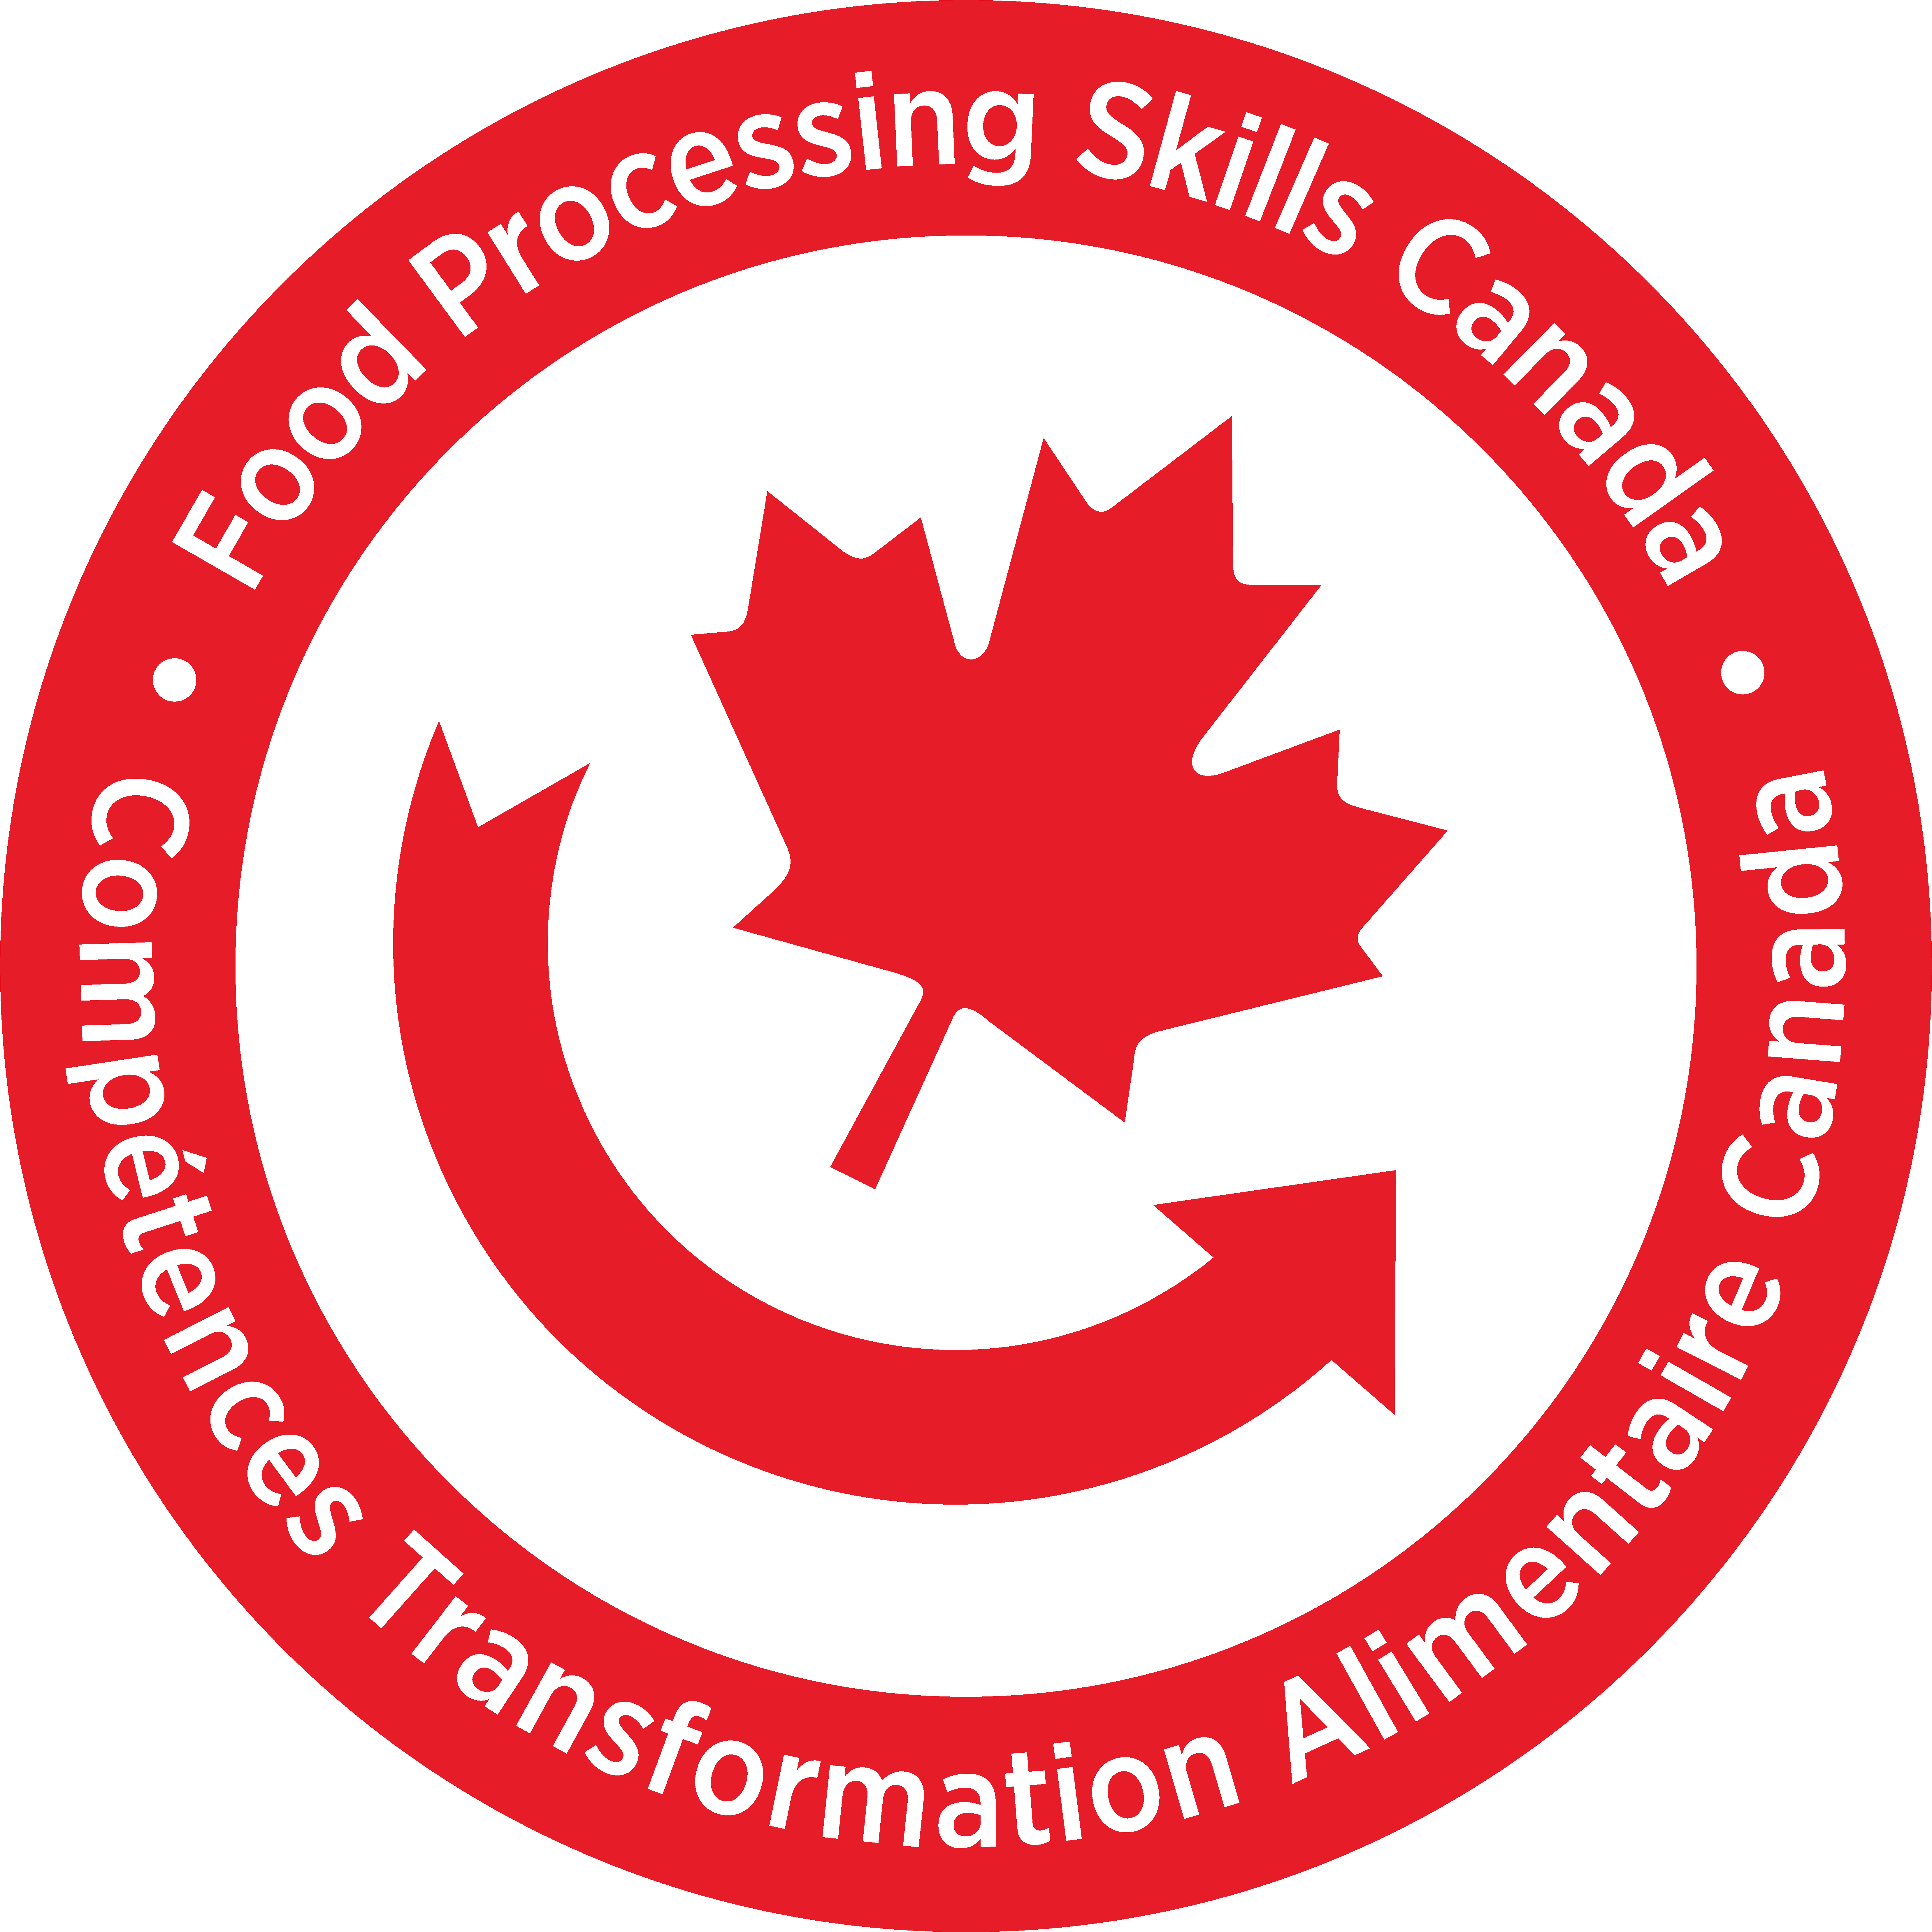 FoodCert Logo